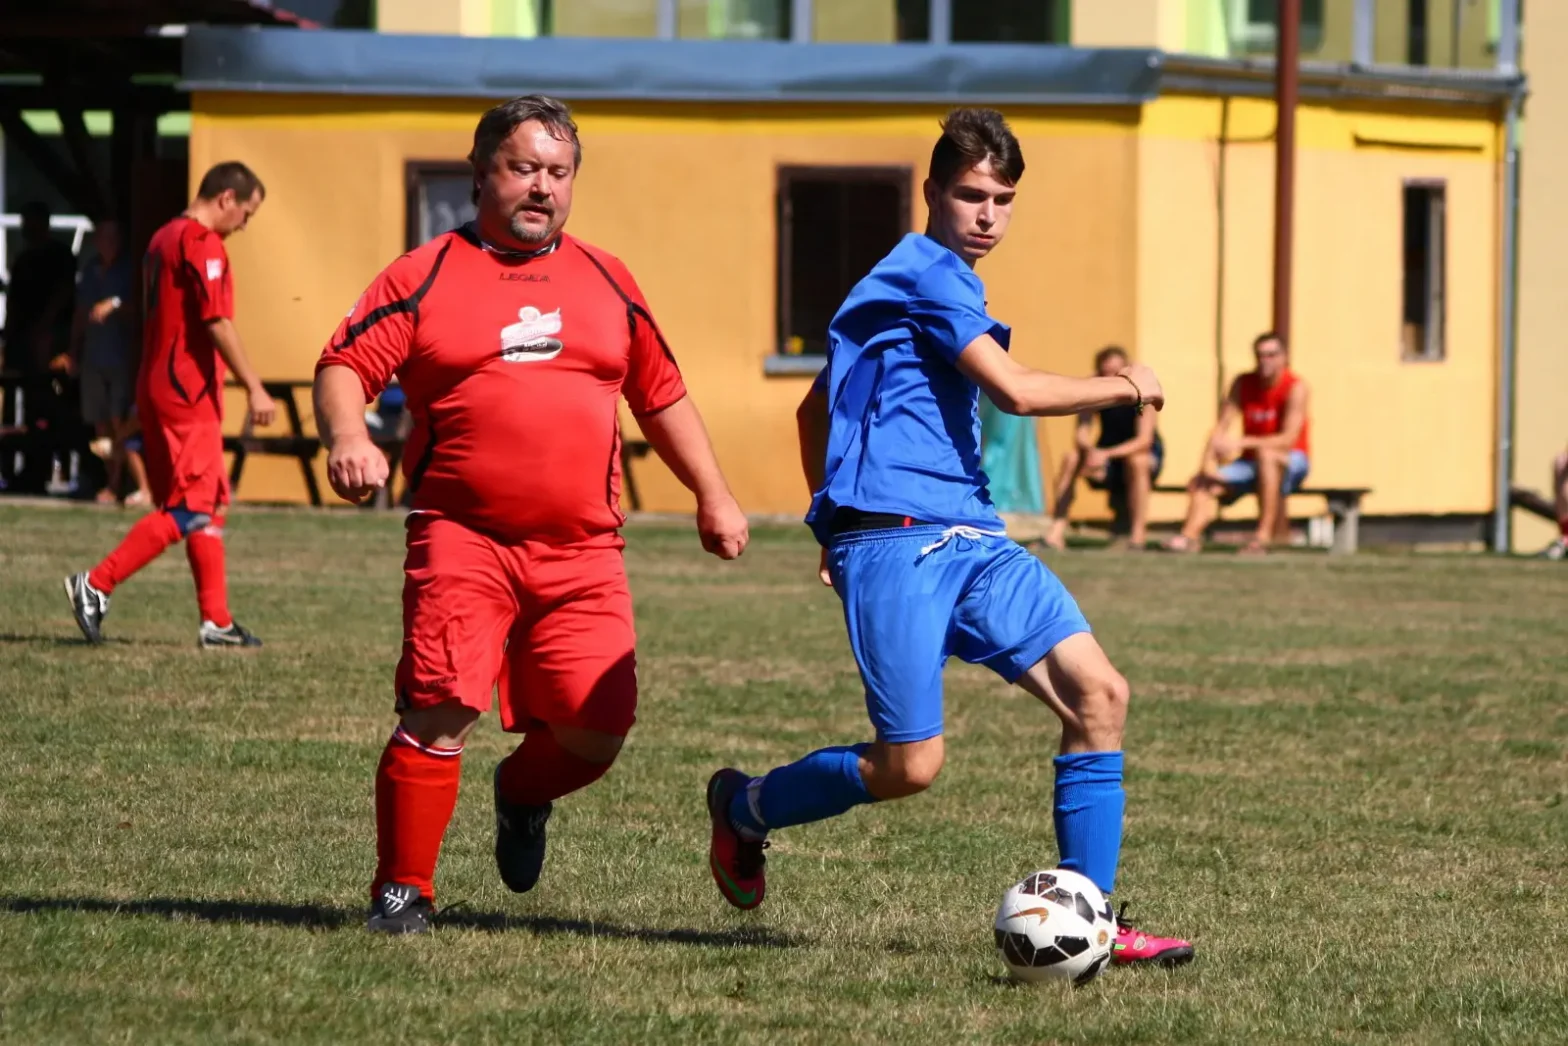 Pouťový fotbal v Chrášťanech v roce 2015